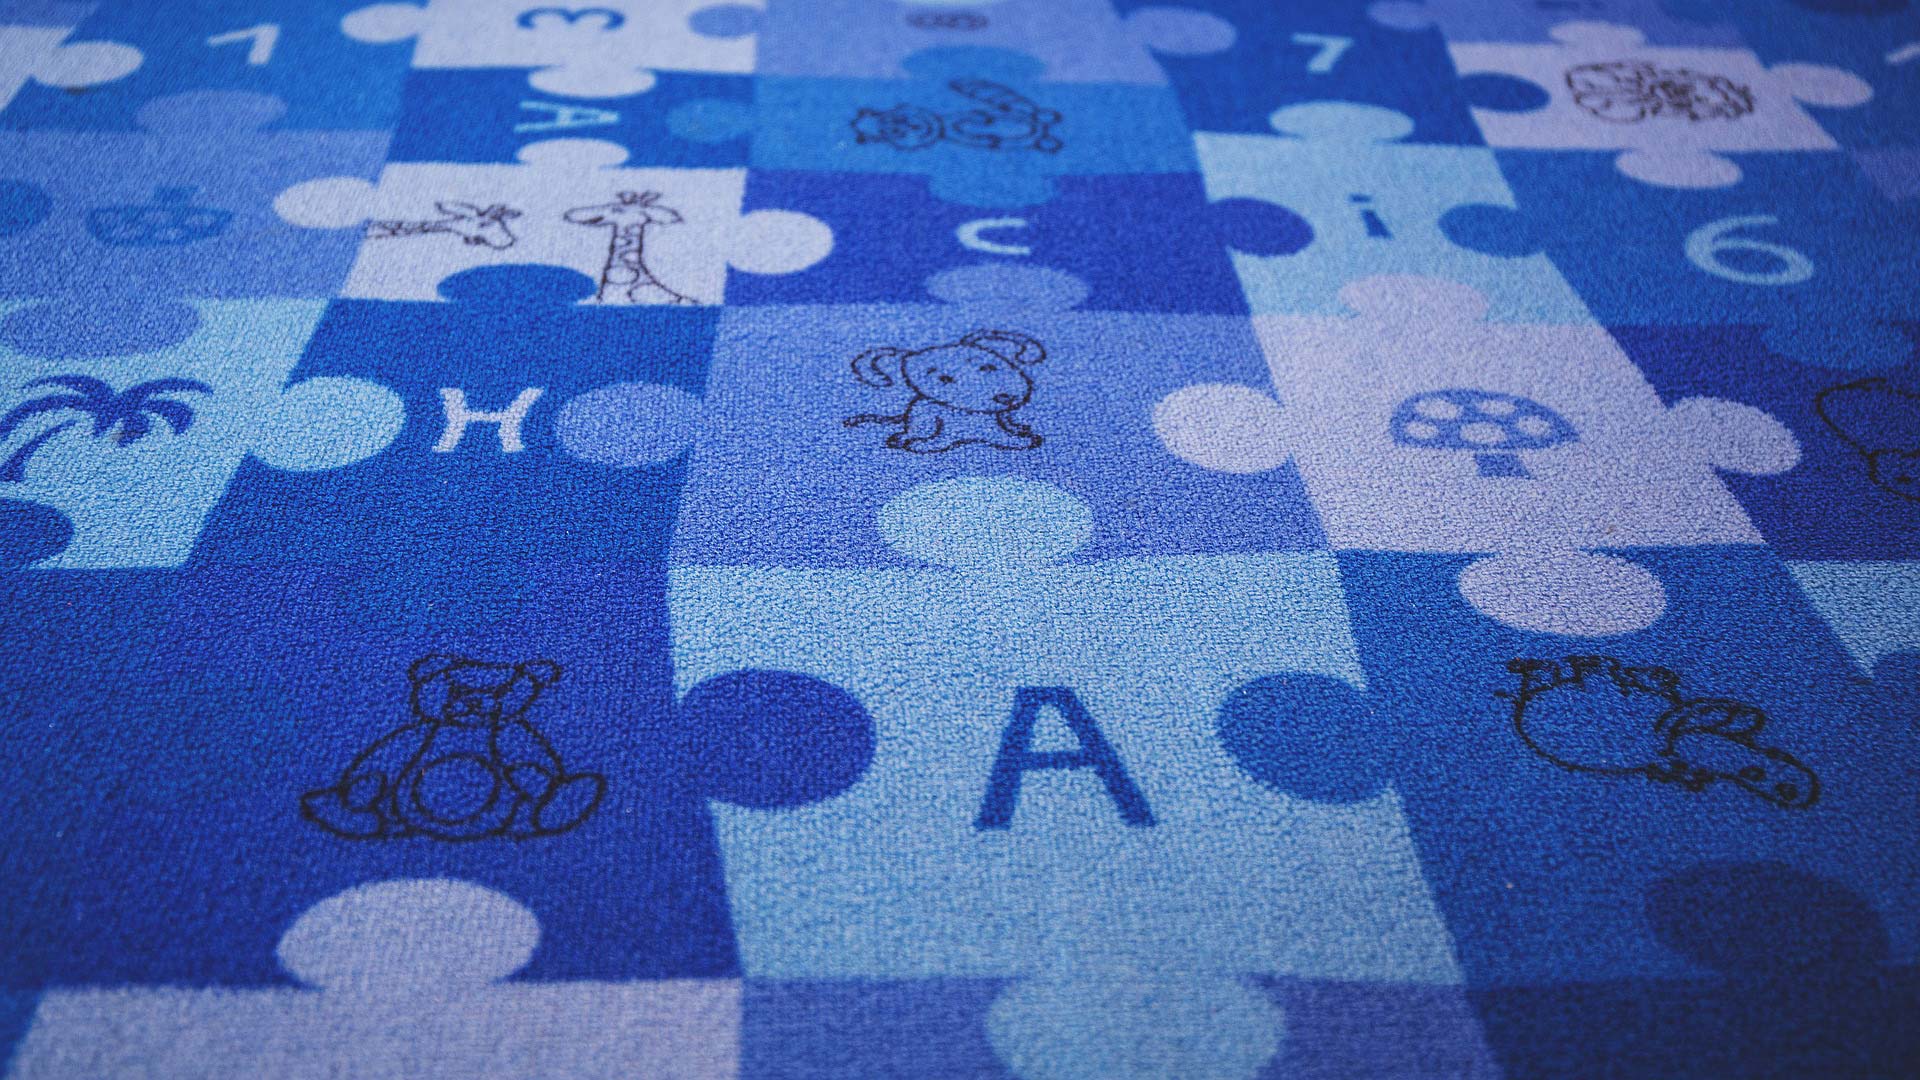 Teppich bedrucken bei Werbemittel Oerlikon in Zürich